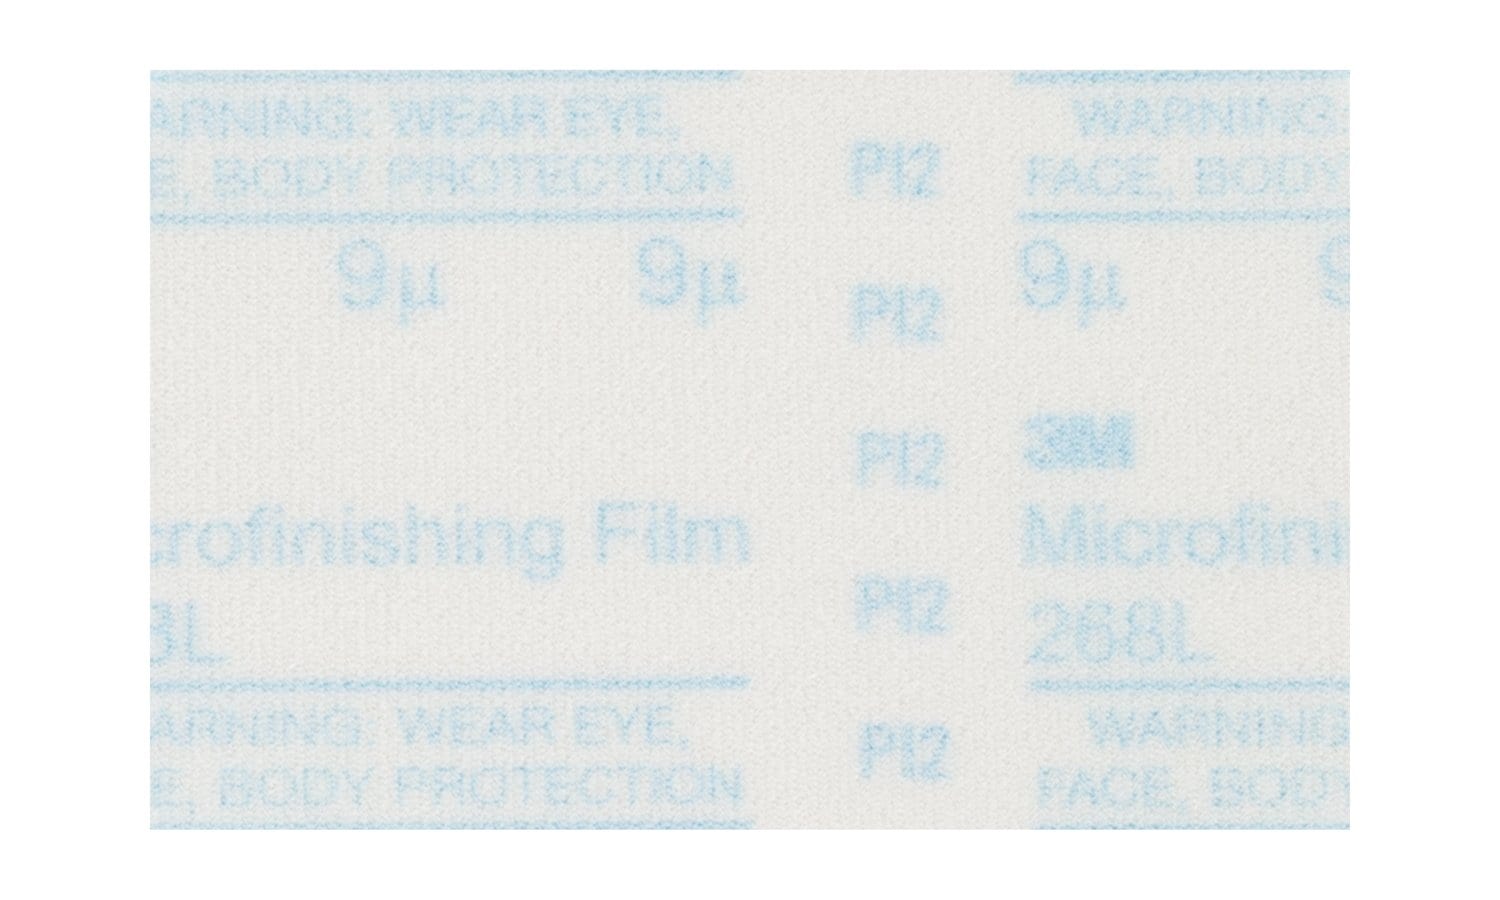 7100047217 - 3M Microfinishing PSA Film Sheet 268L, 30 Mic, Type D, Config